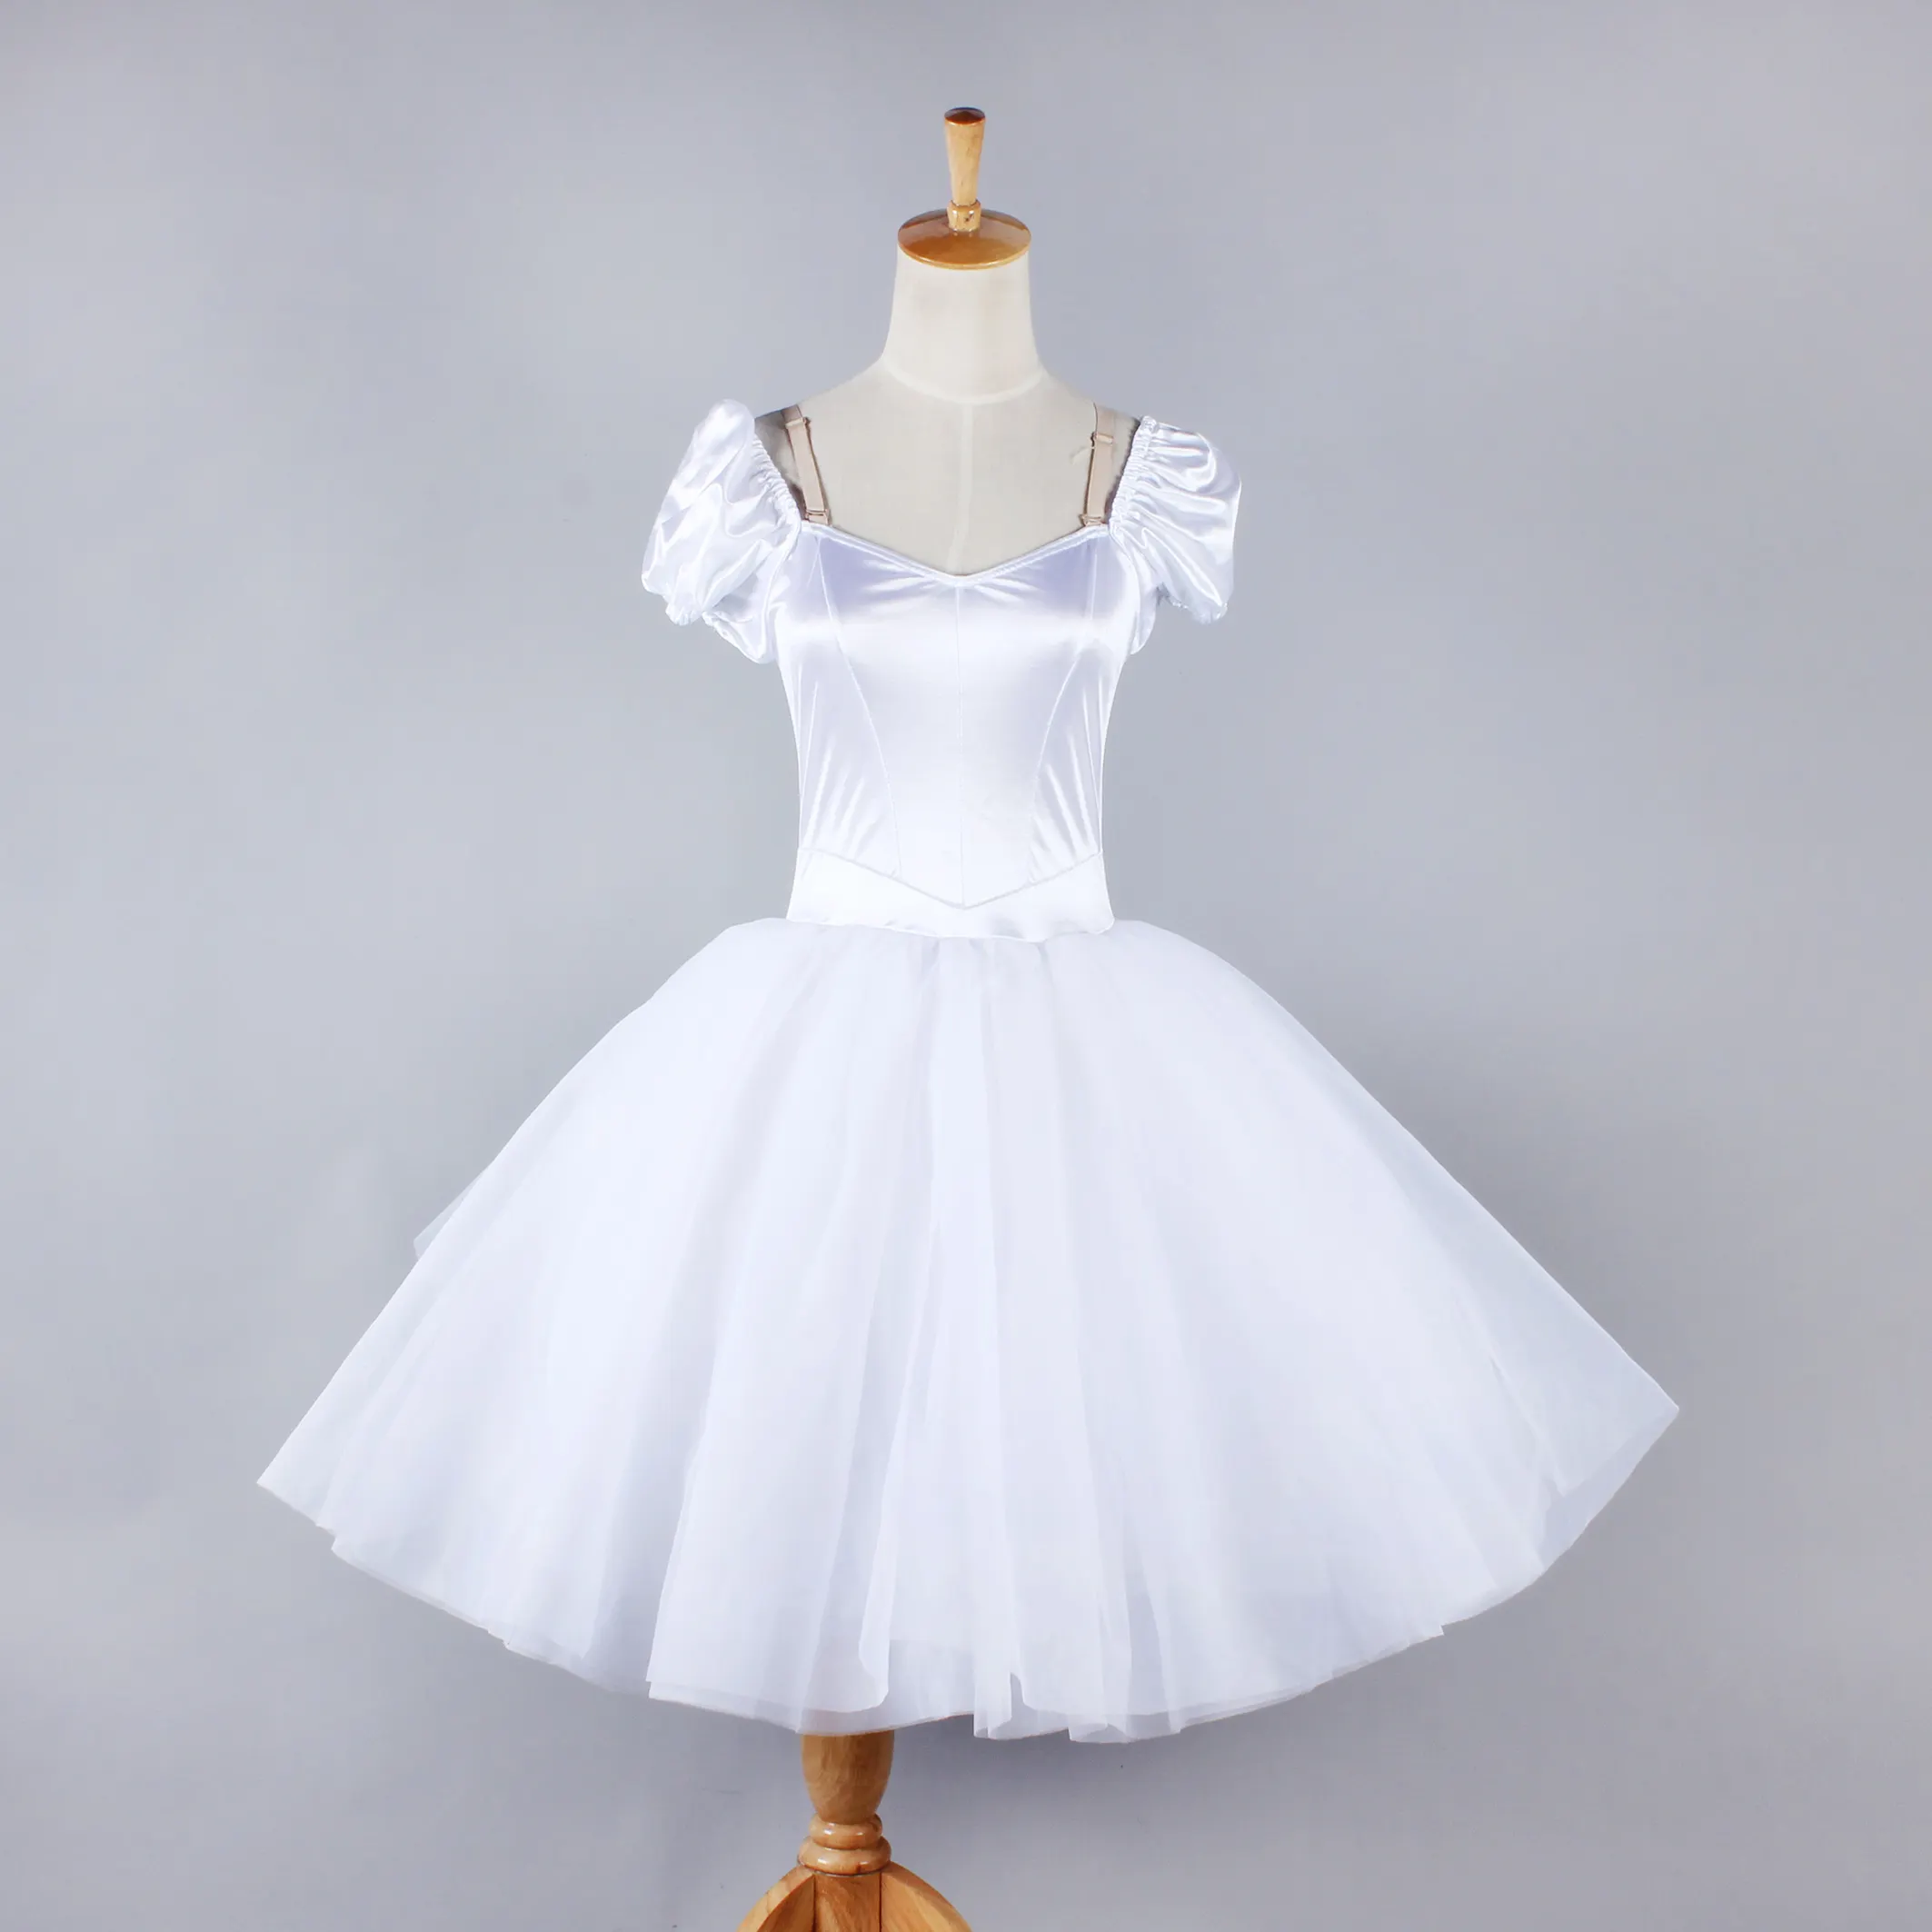 वयस्क लड़की सफेद बैले टूटू पोशाक रोमांटिक साटन नृत्य पहनने सफेद लंबी मंच प्रदर्शन नृत्य पोशाक